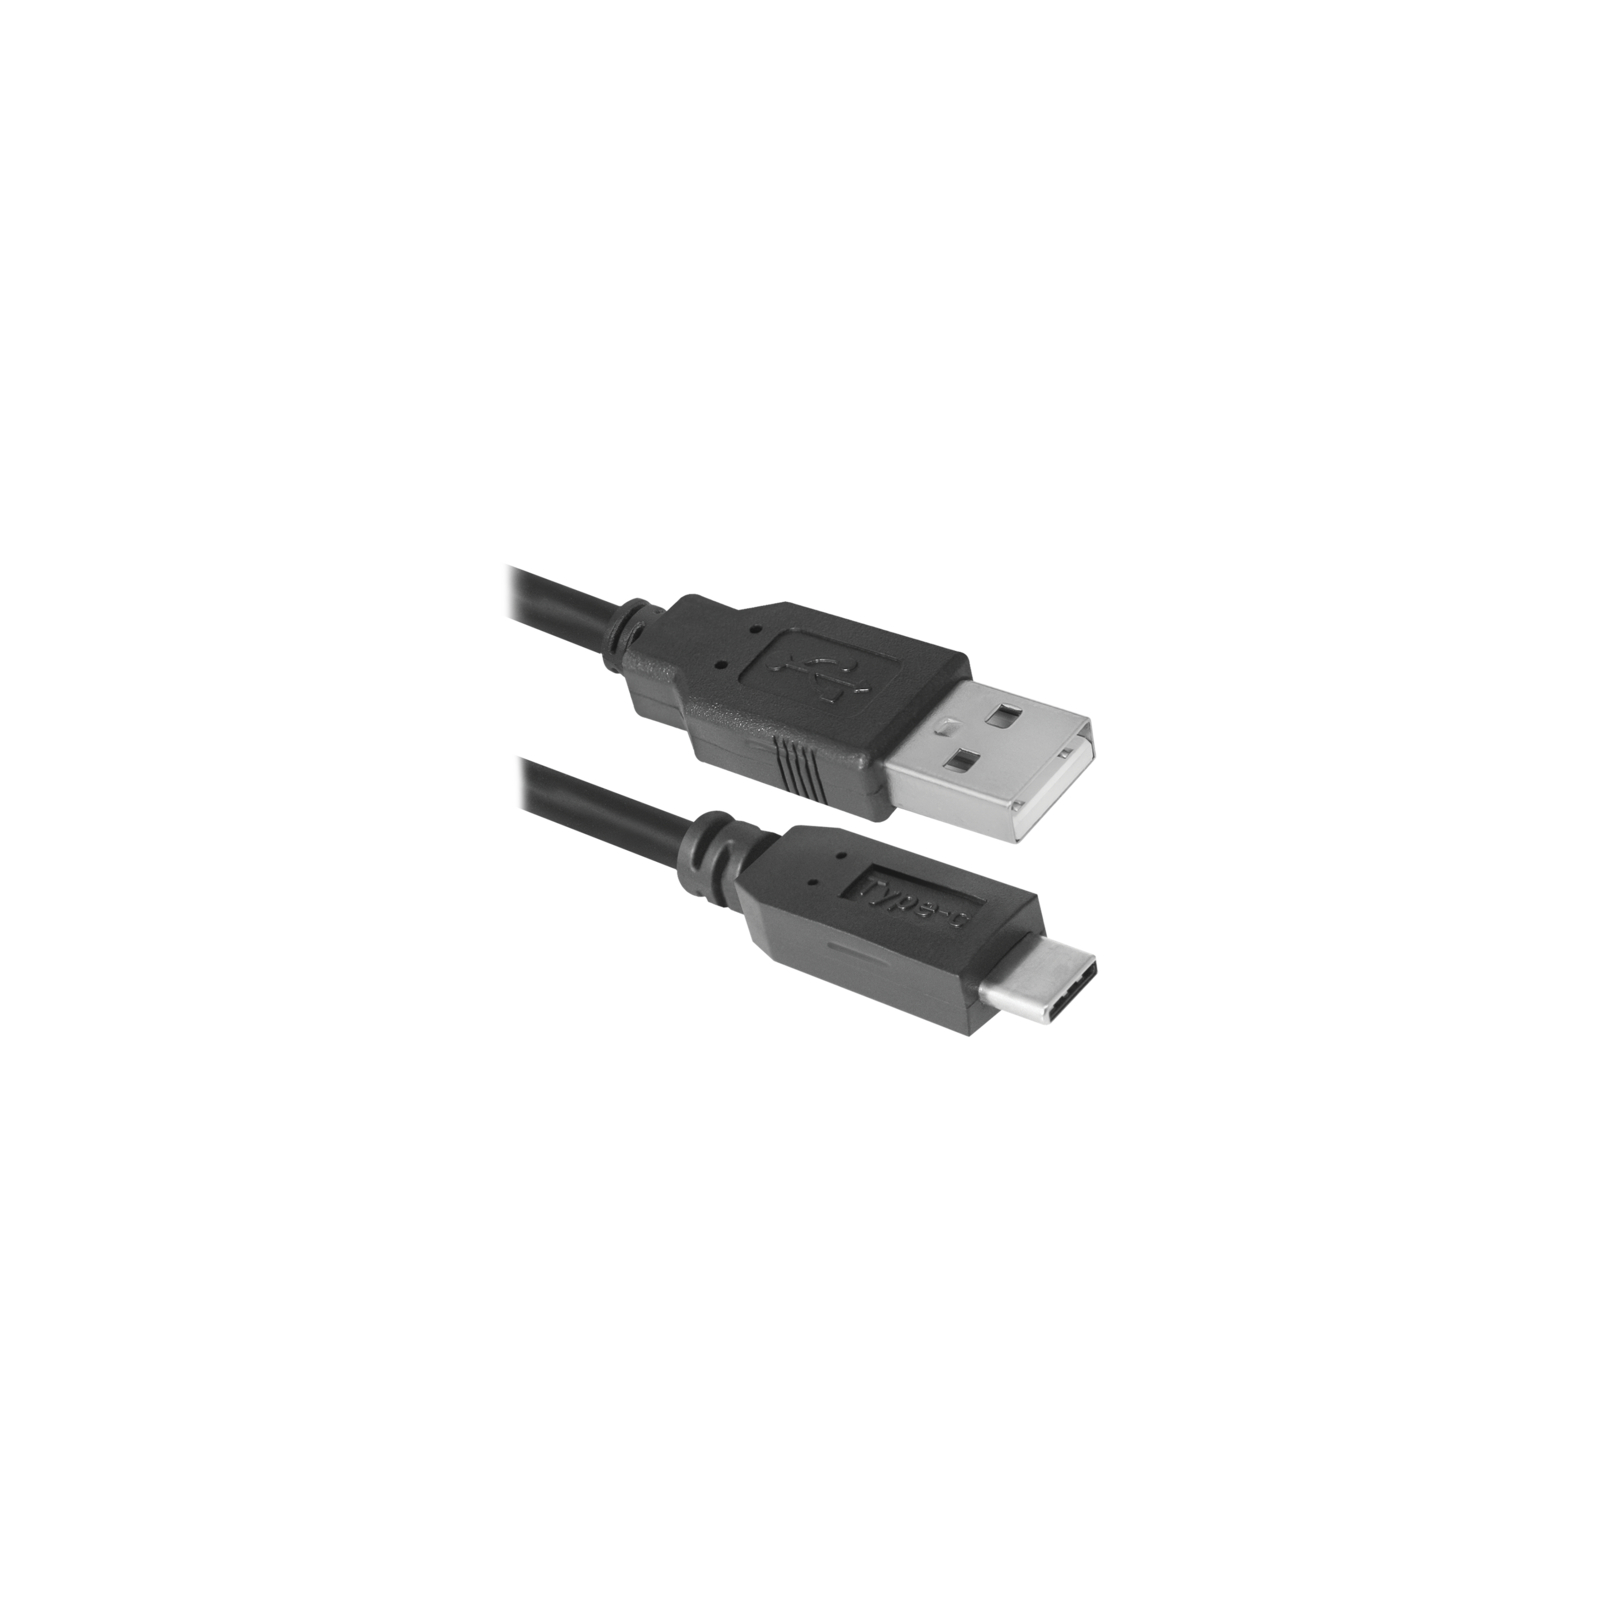 Дата кабель USB 2.0 AM to Type-C 1.0m USB09-03PRO black Defender (87492)